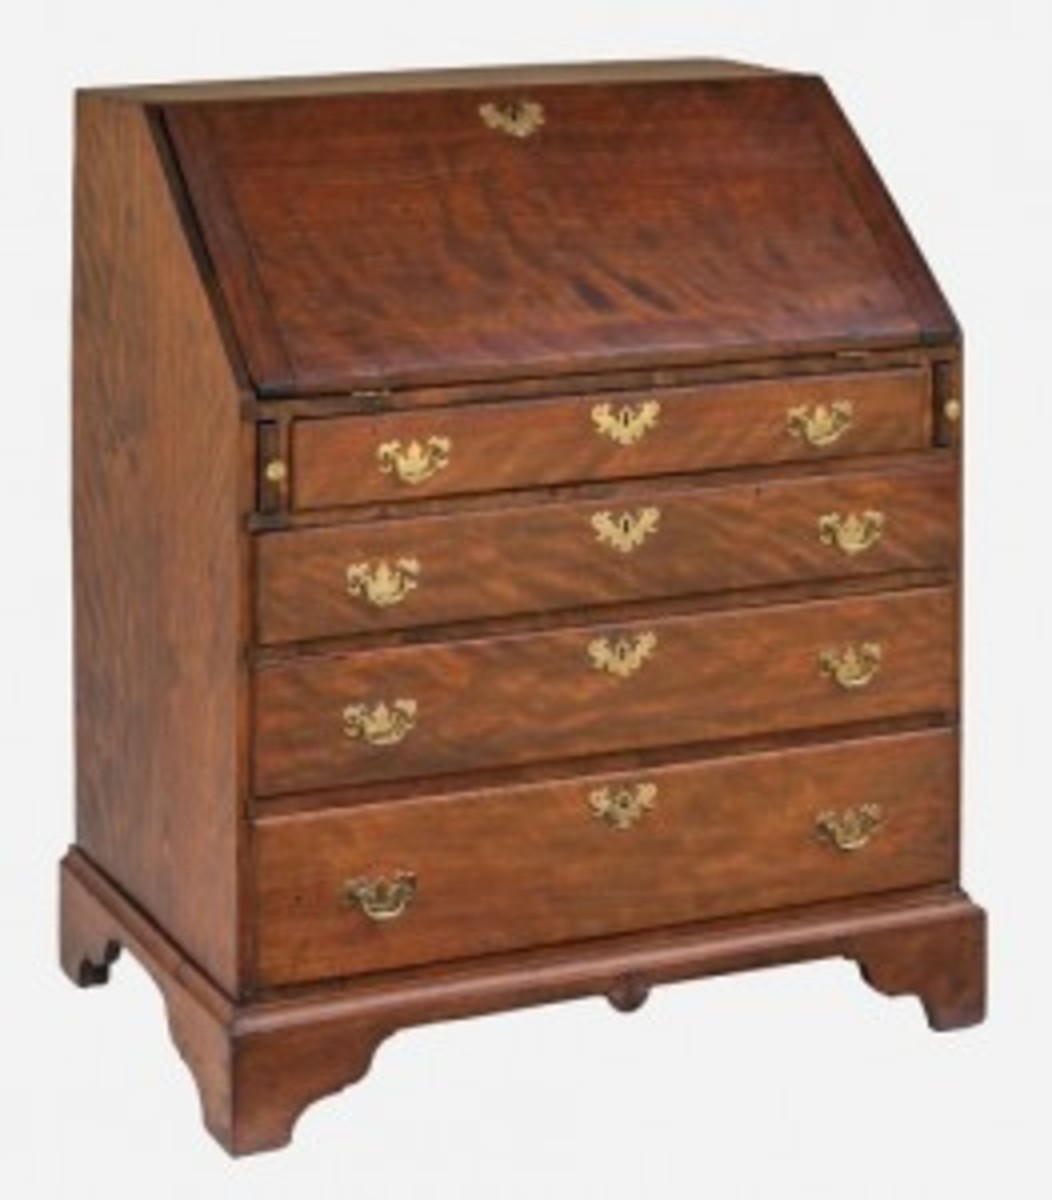 18th century slant lid chest